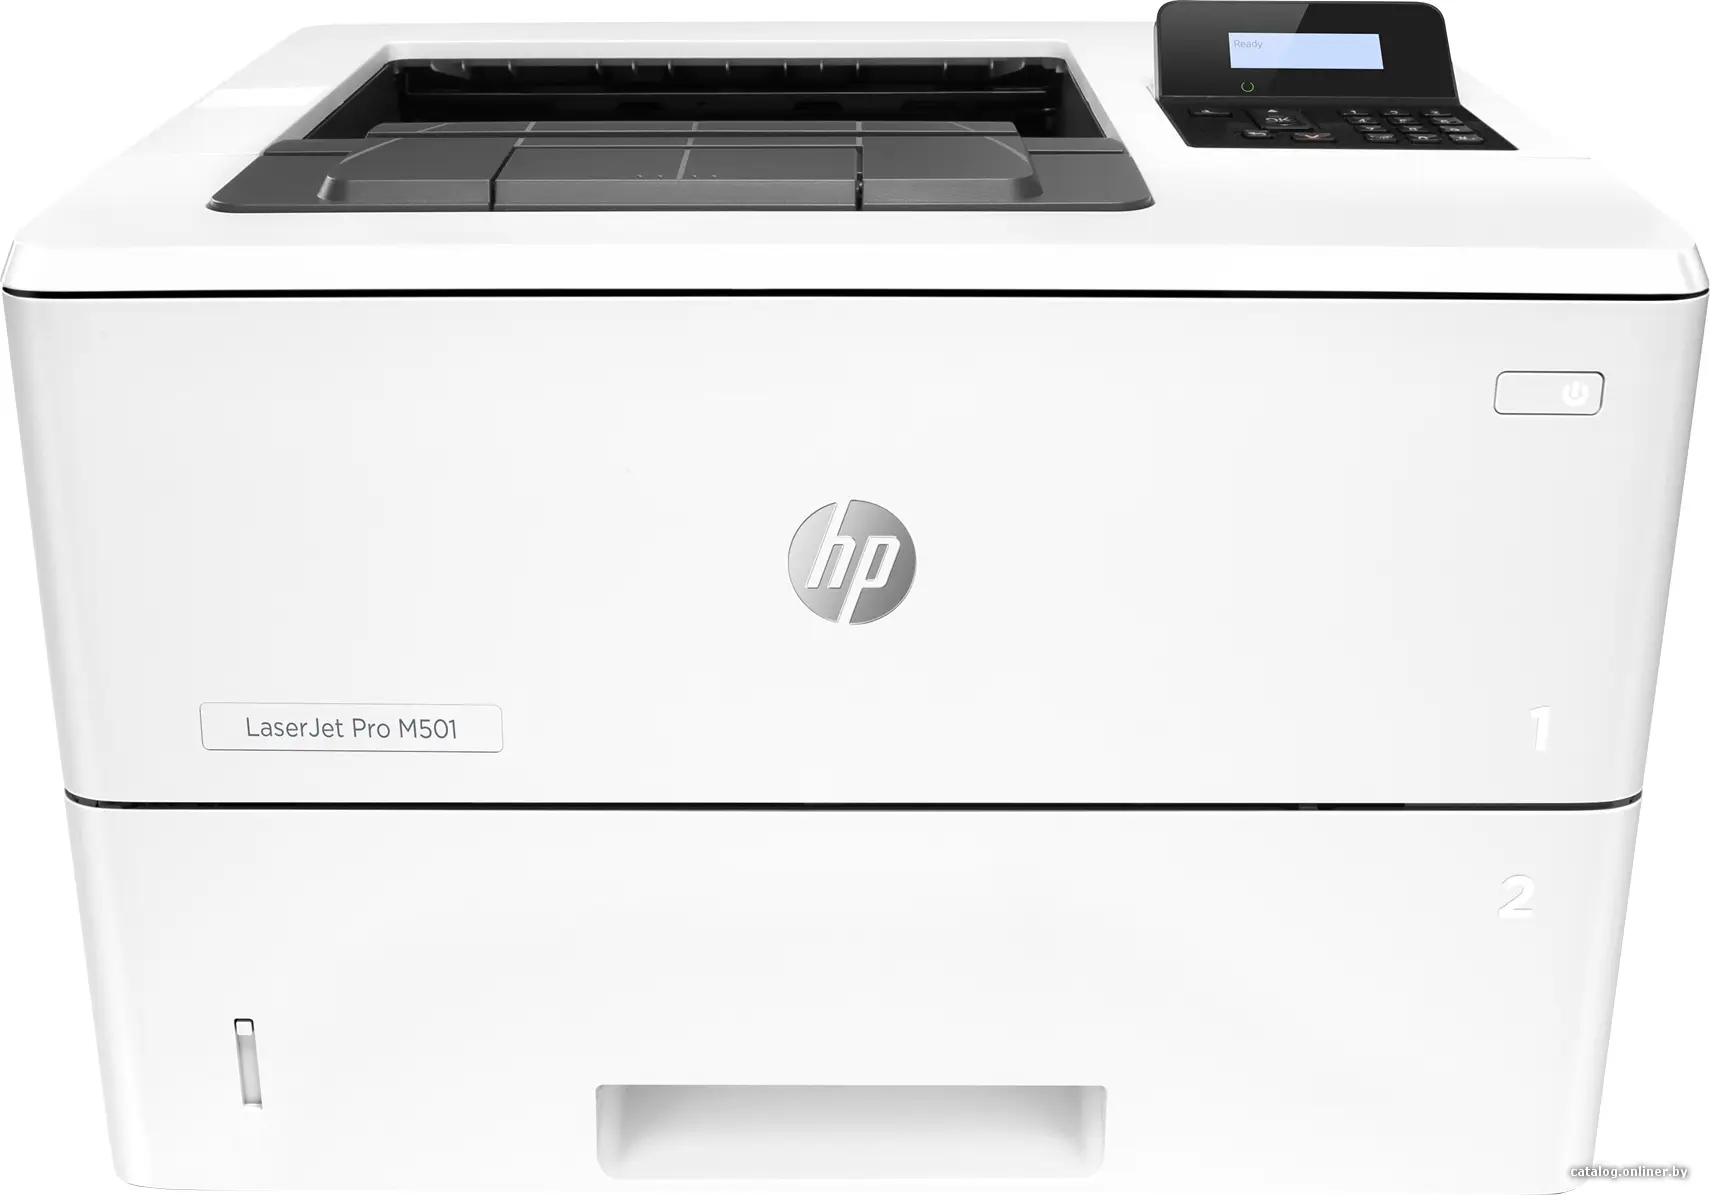 Купить Принтер HP LaserJet Pro M501dn, цена, опт и розница